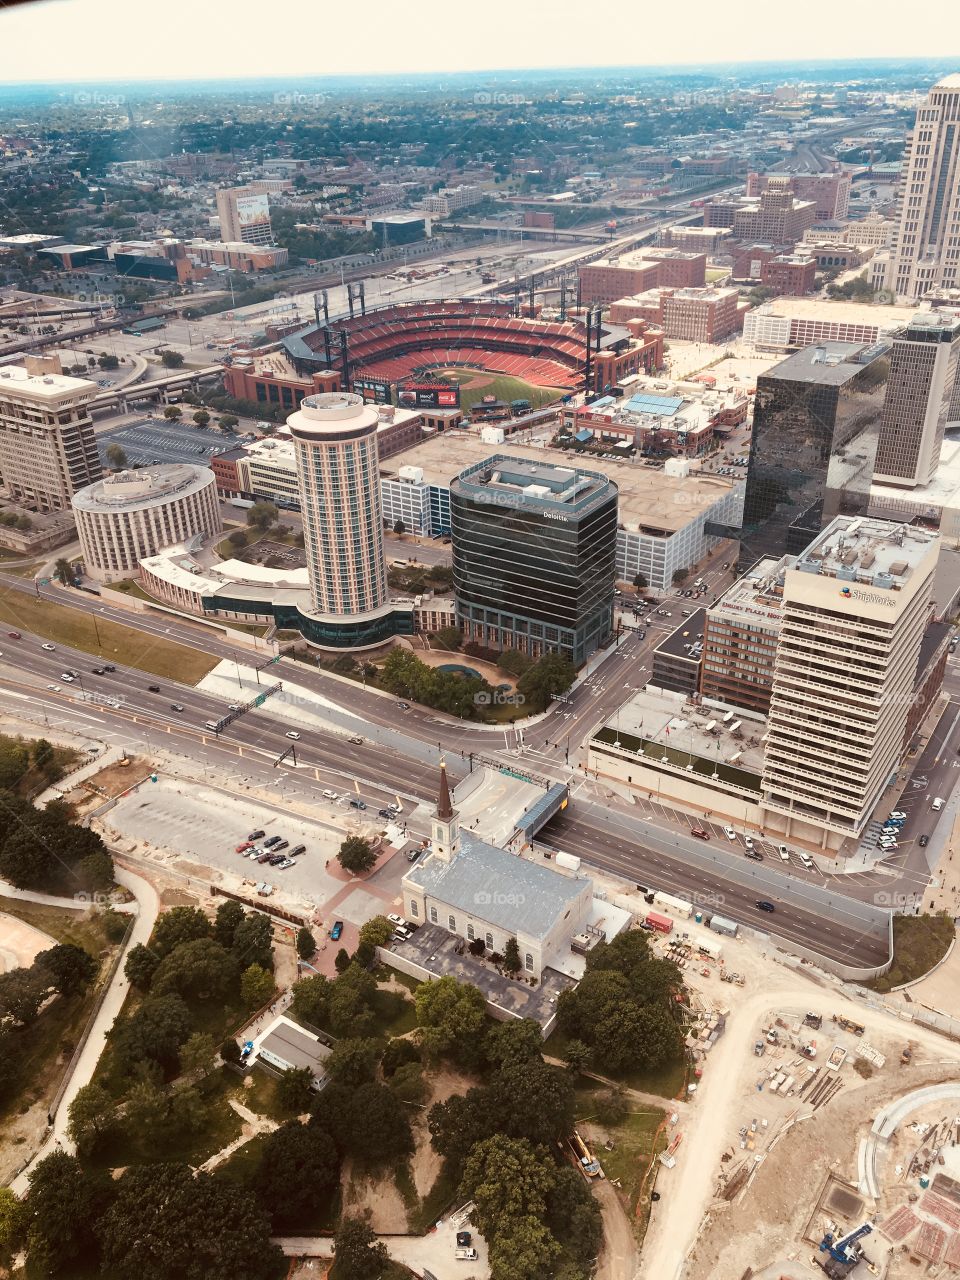 City architecture stadium cardinals St. Louis baseball overhead Birdseye view beautiful vivid warm streets